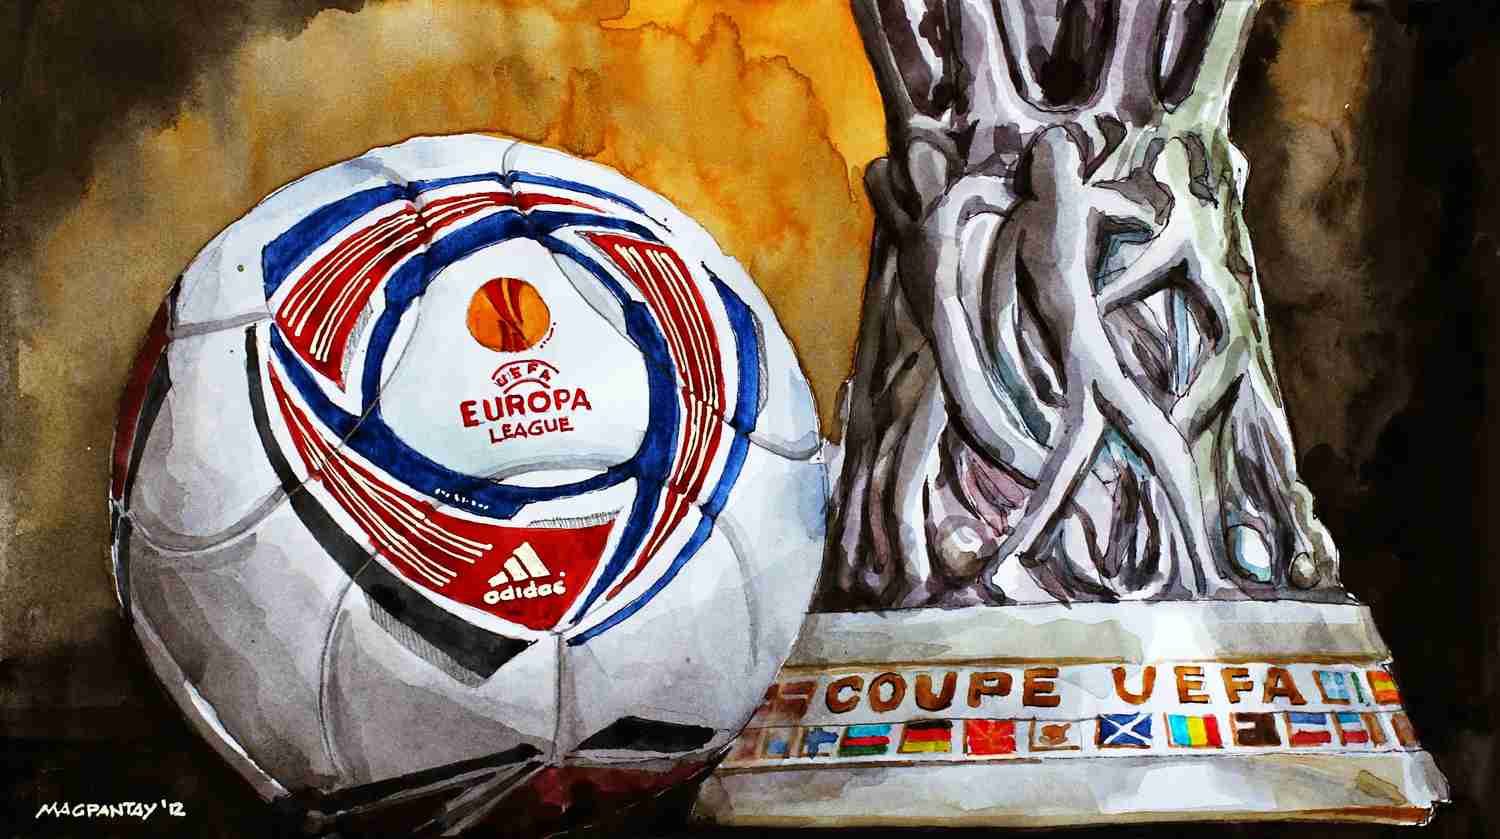 _Europa League Pokal und Ball